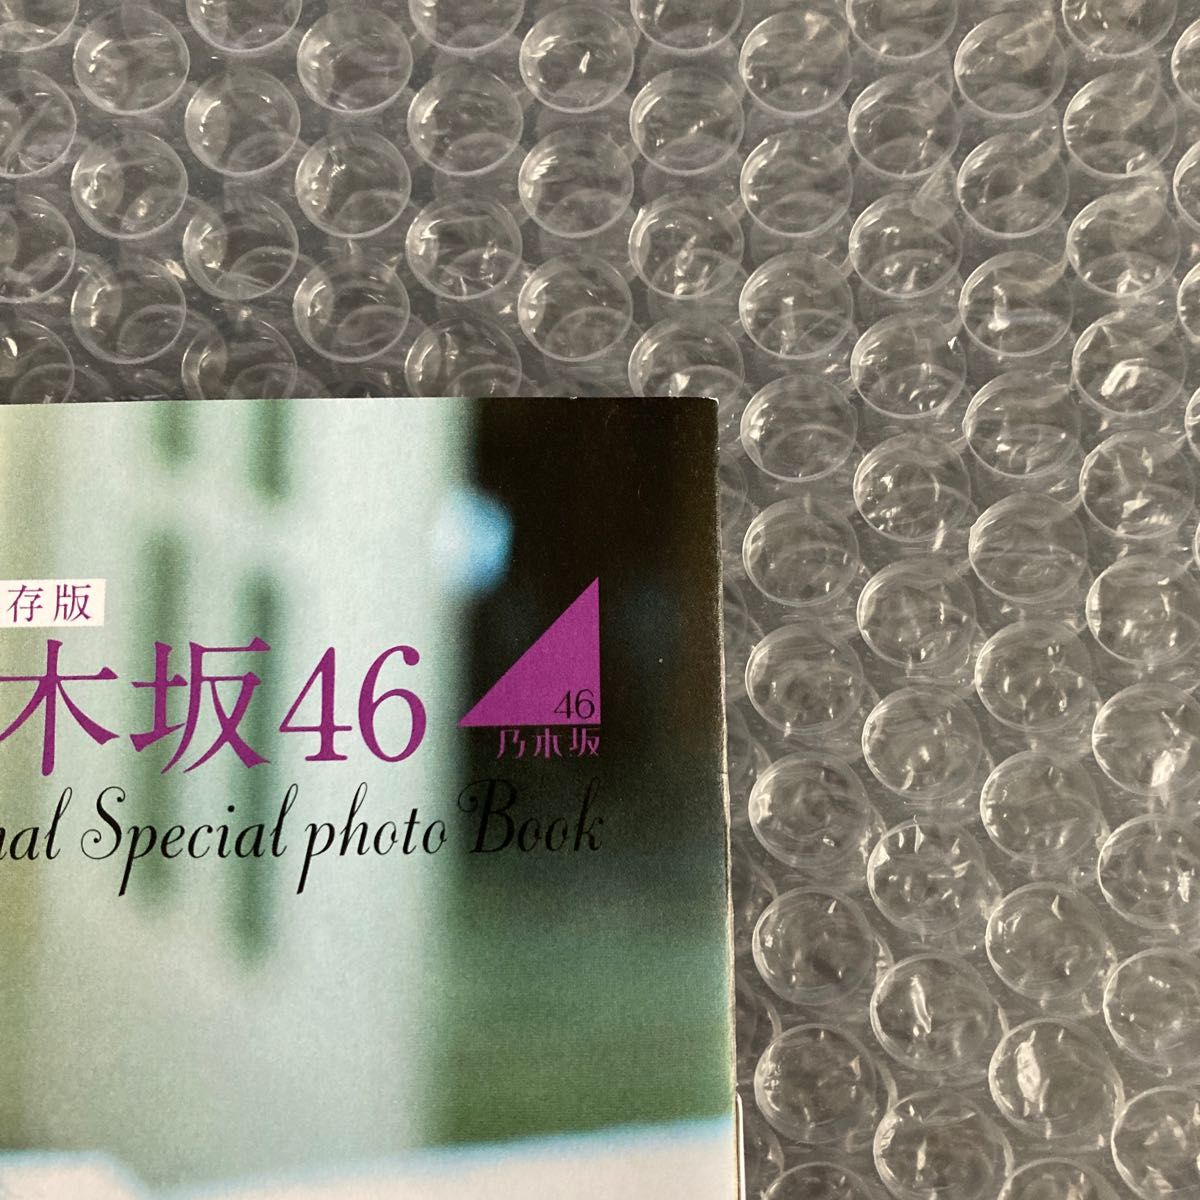 【乃木坂46】Original Special Photo Book